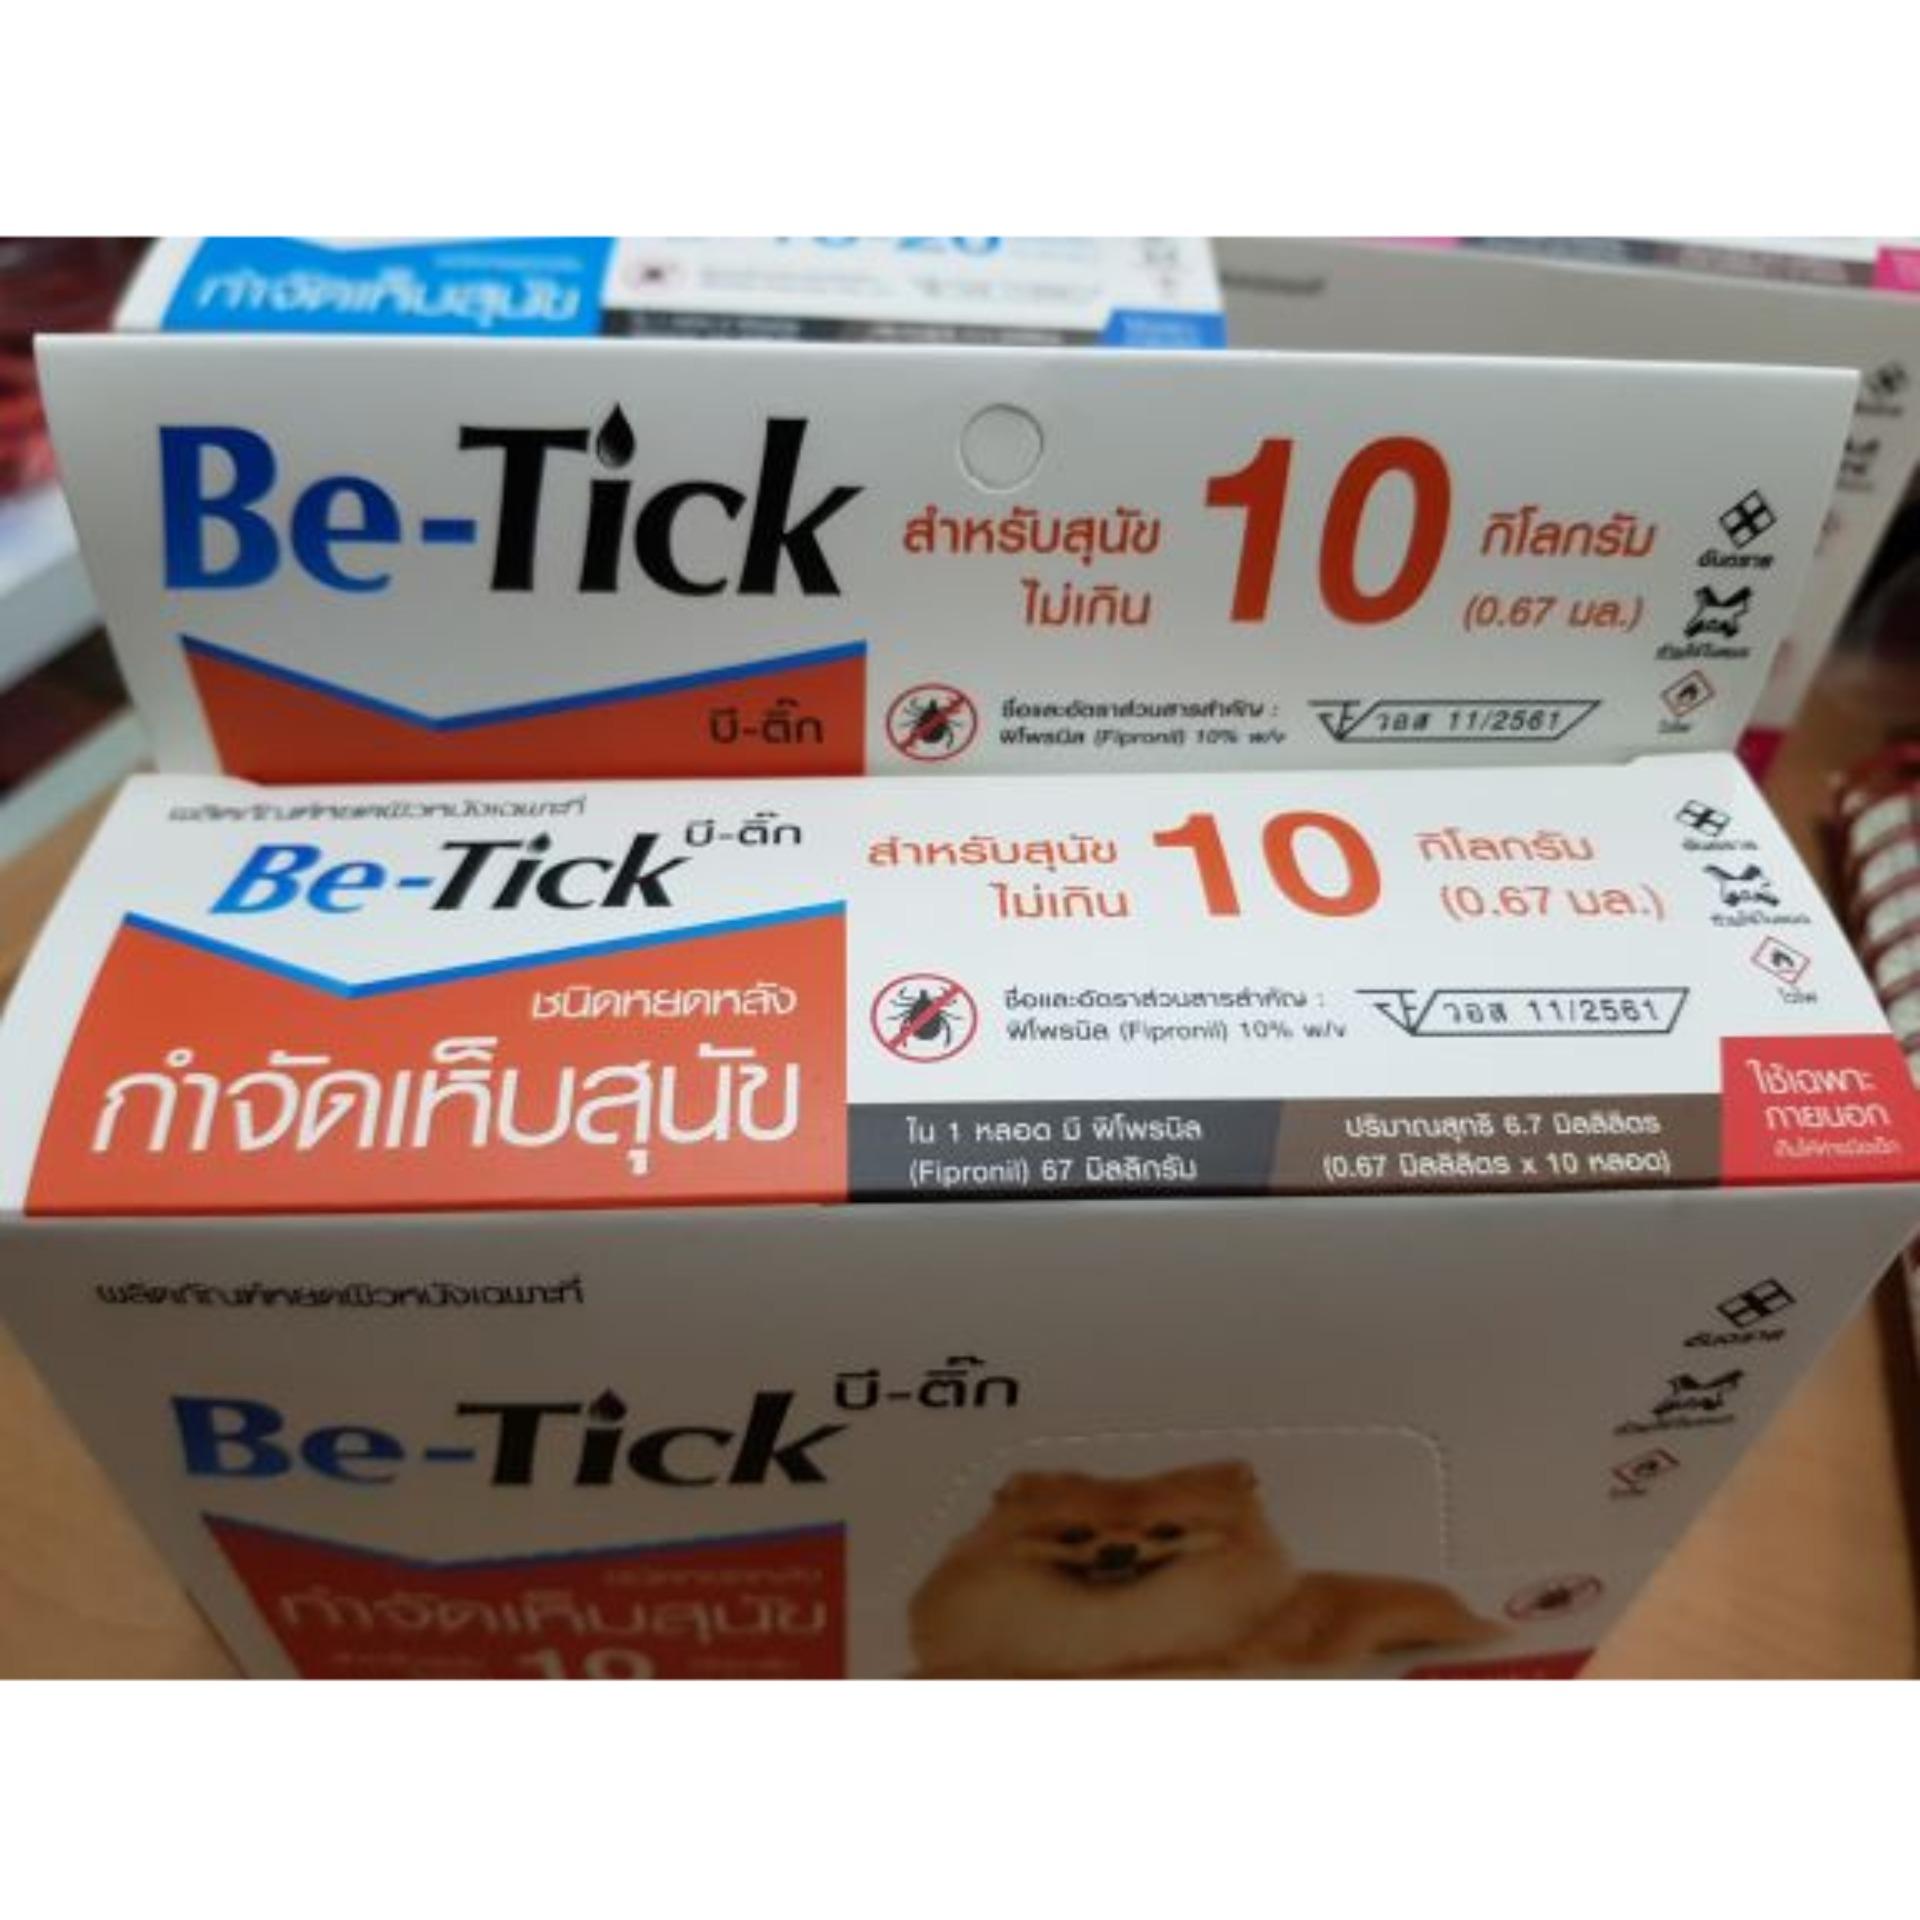 Be-Tick บีติ๊ก be tick ยากำจัดเห็บหมัด  ยาหยดกำจัดเห็บ หมัด สุนัข สำหรับสุนัขน้ำหนักไม่เกิน 10 kg., 10-20kg.,และ 20-40kg. 1 หลอด